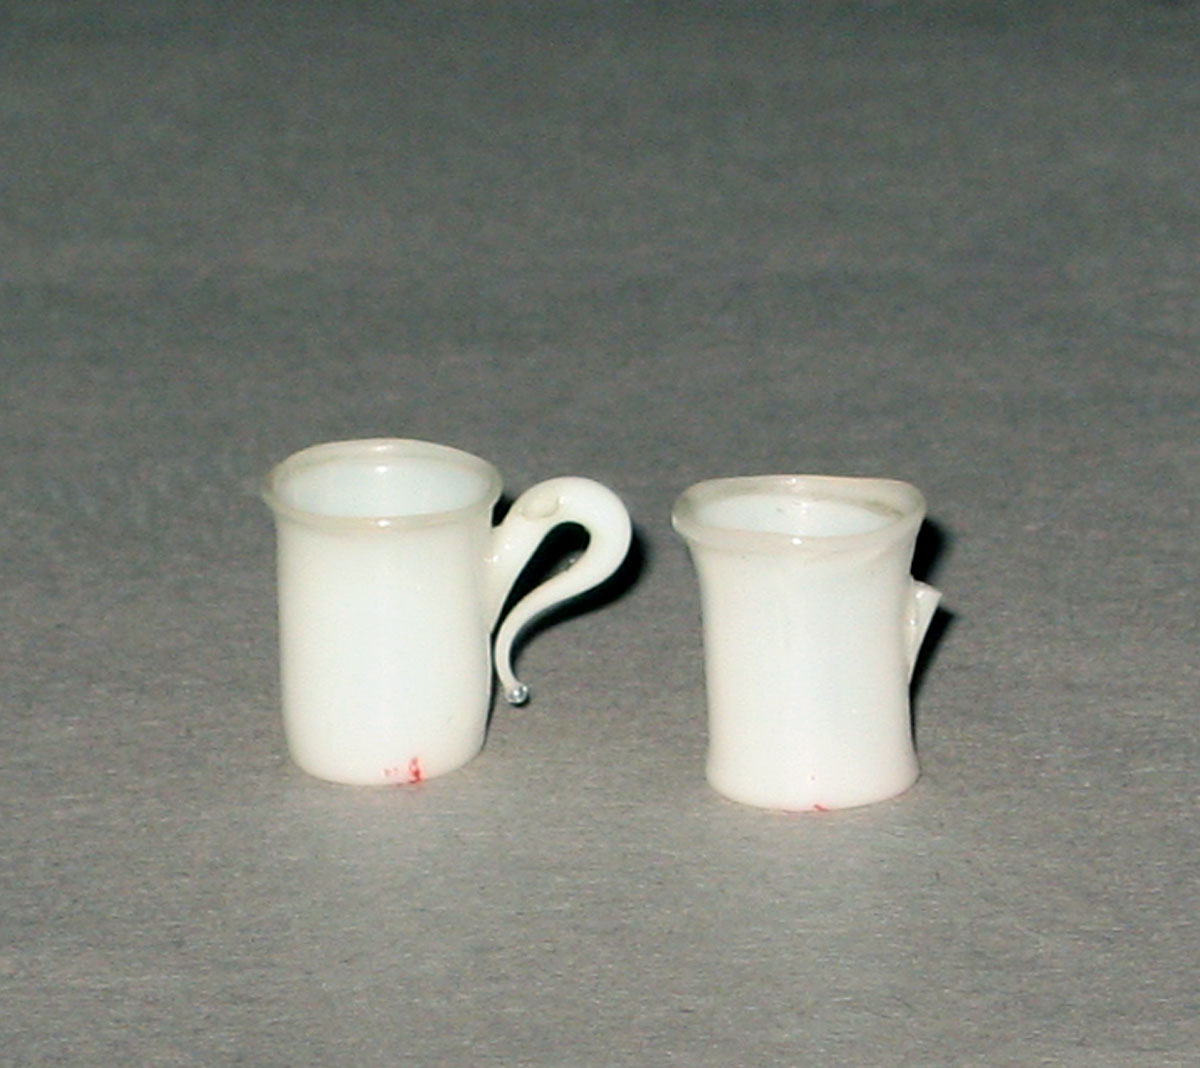 1964.1396.002, .004 Miniature glass teacups